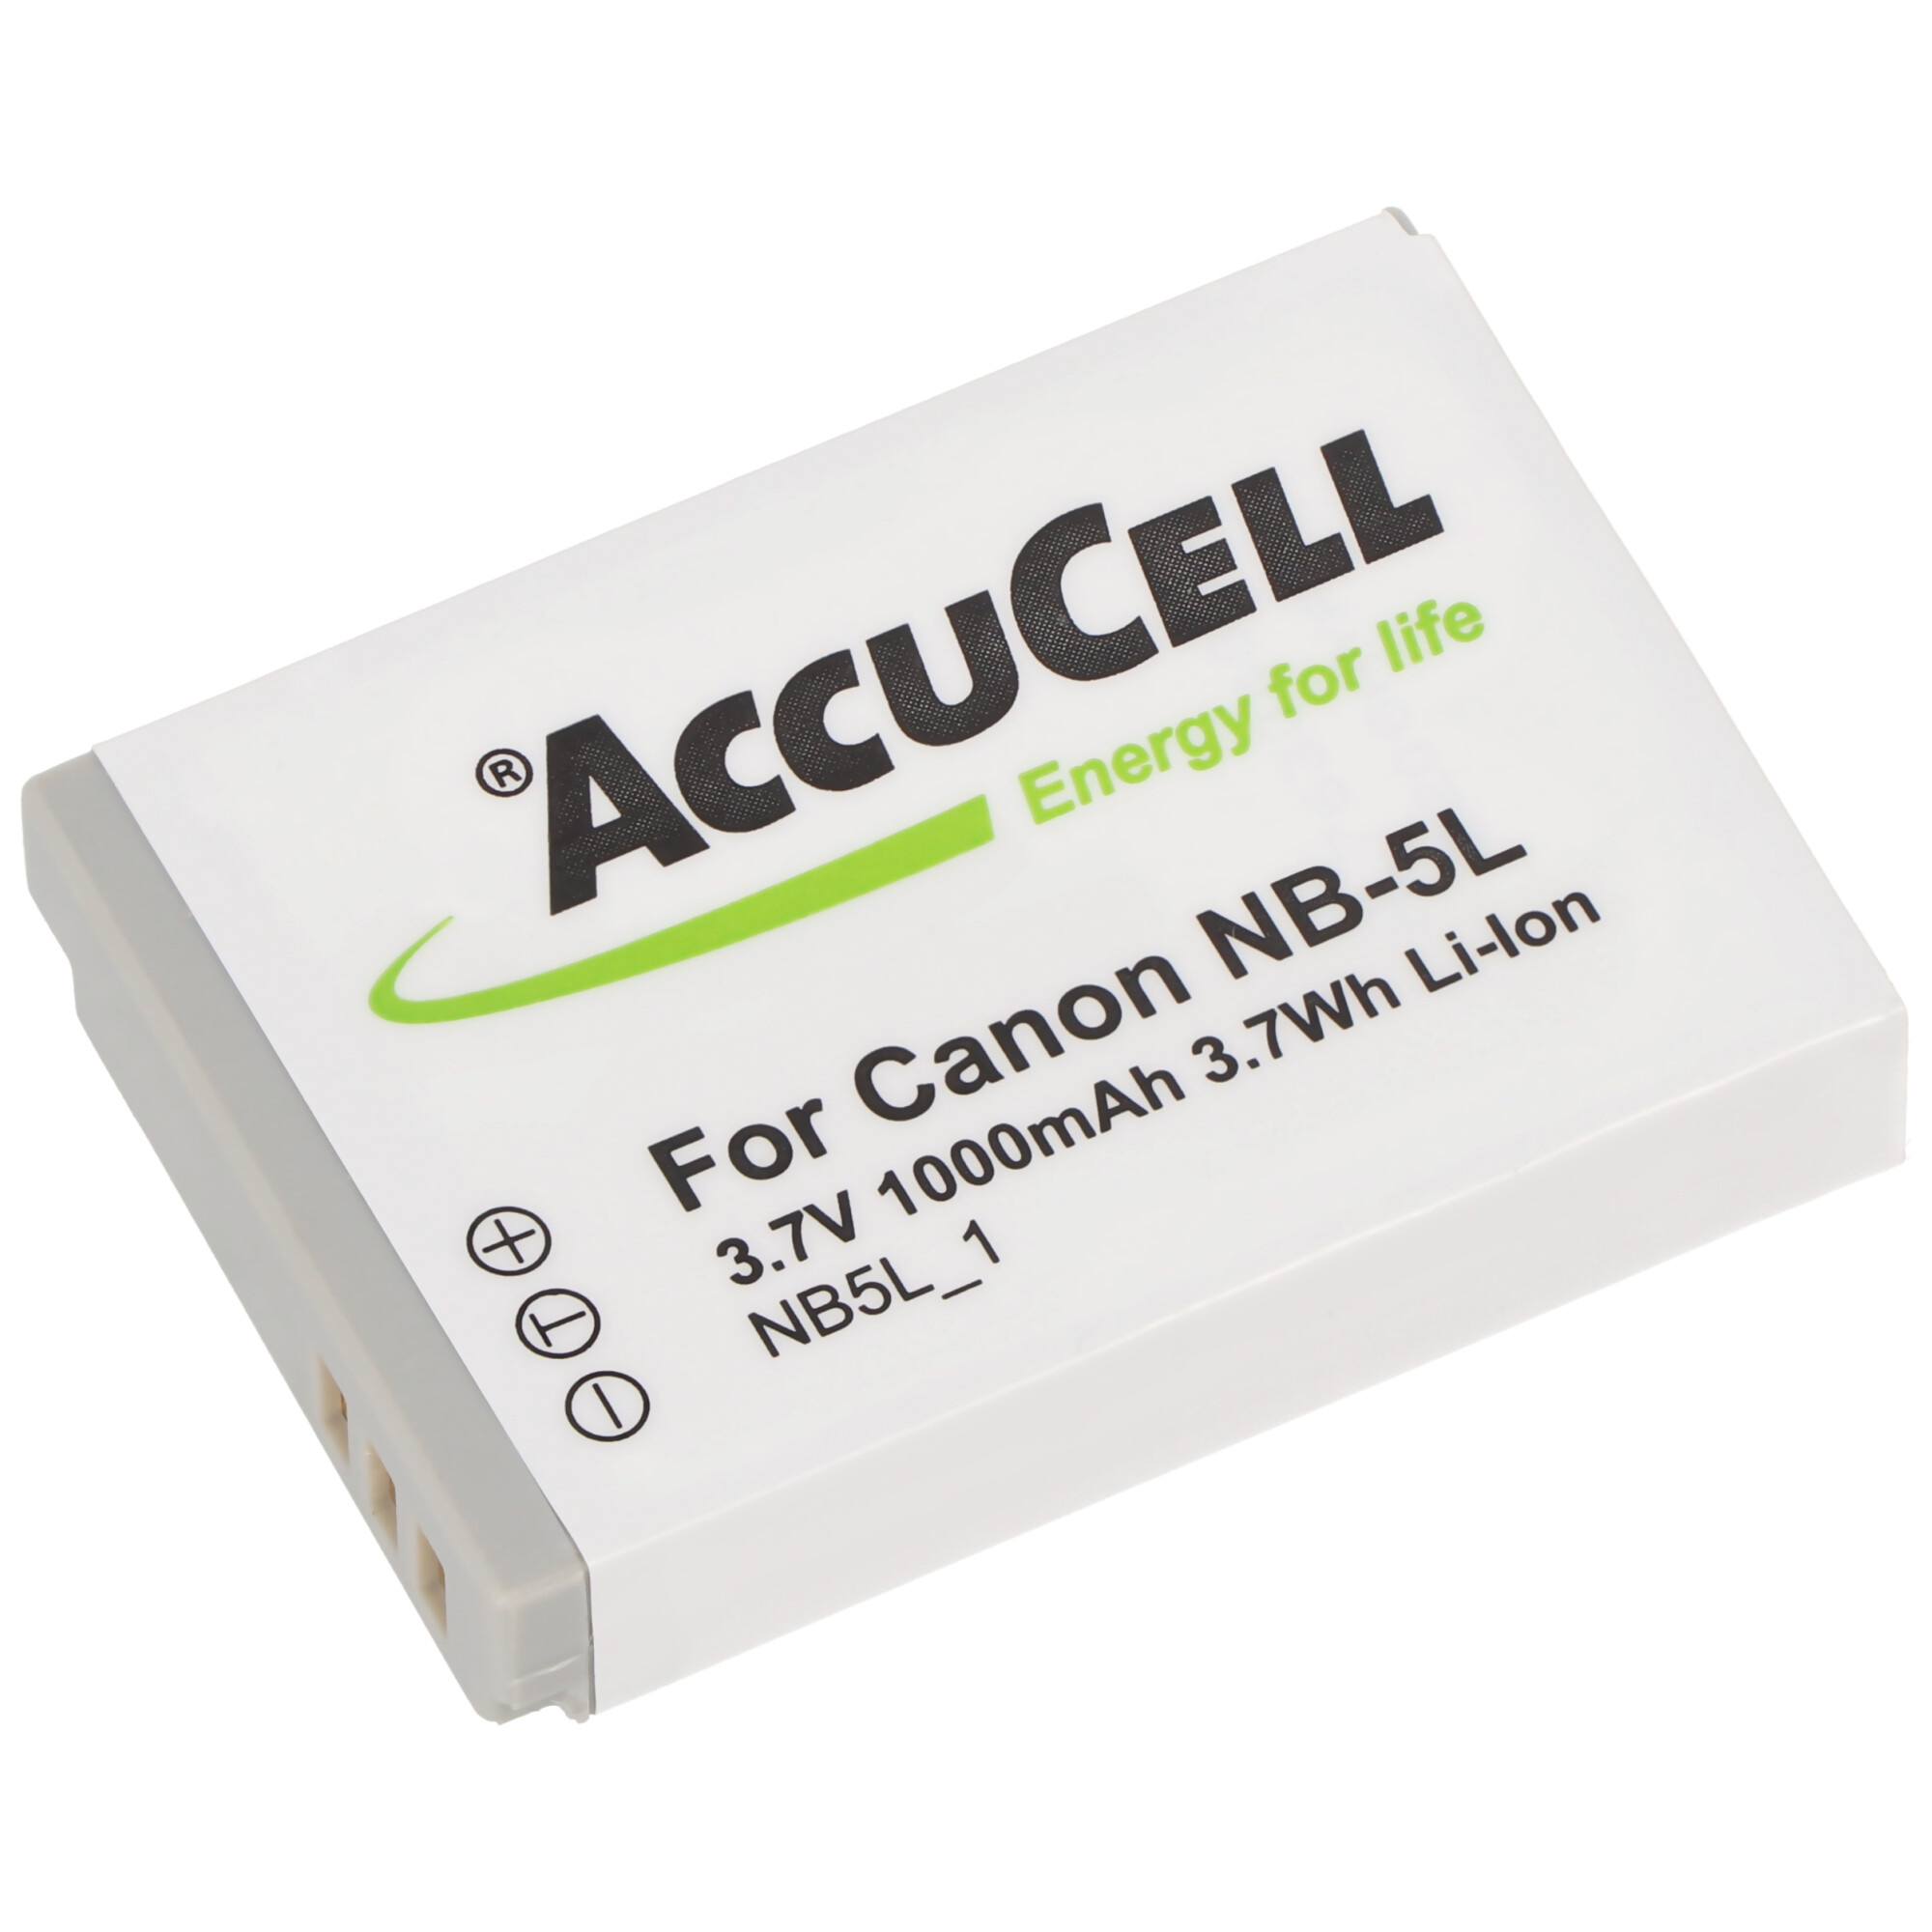 AccuCell Akku passend für Canon PowerShot SD900 Akku